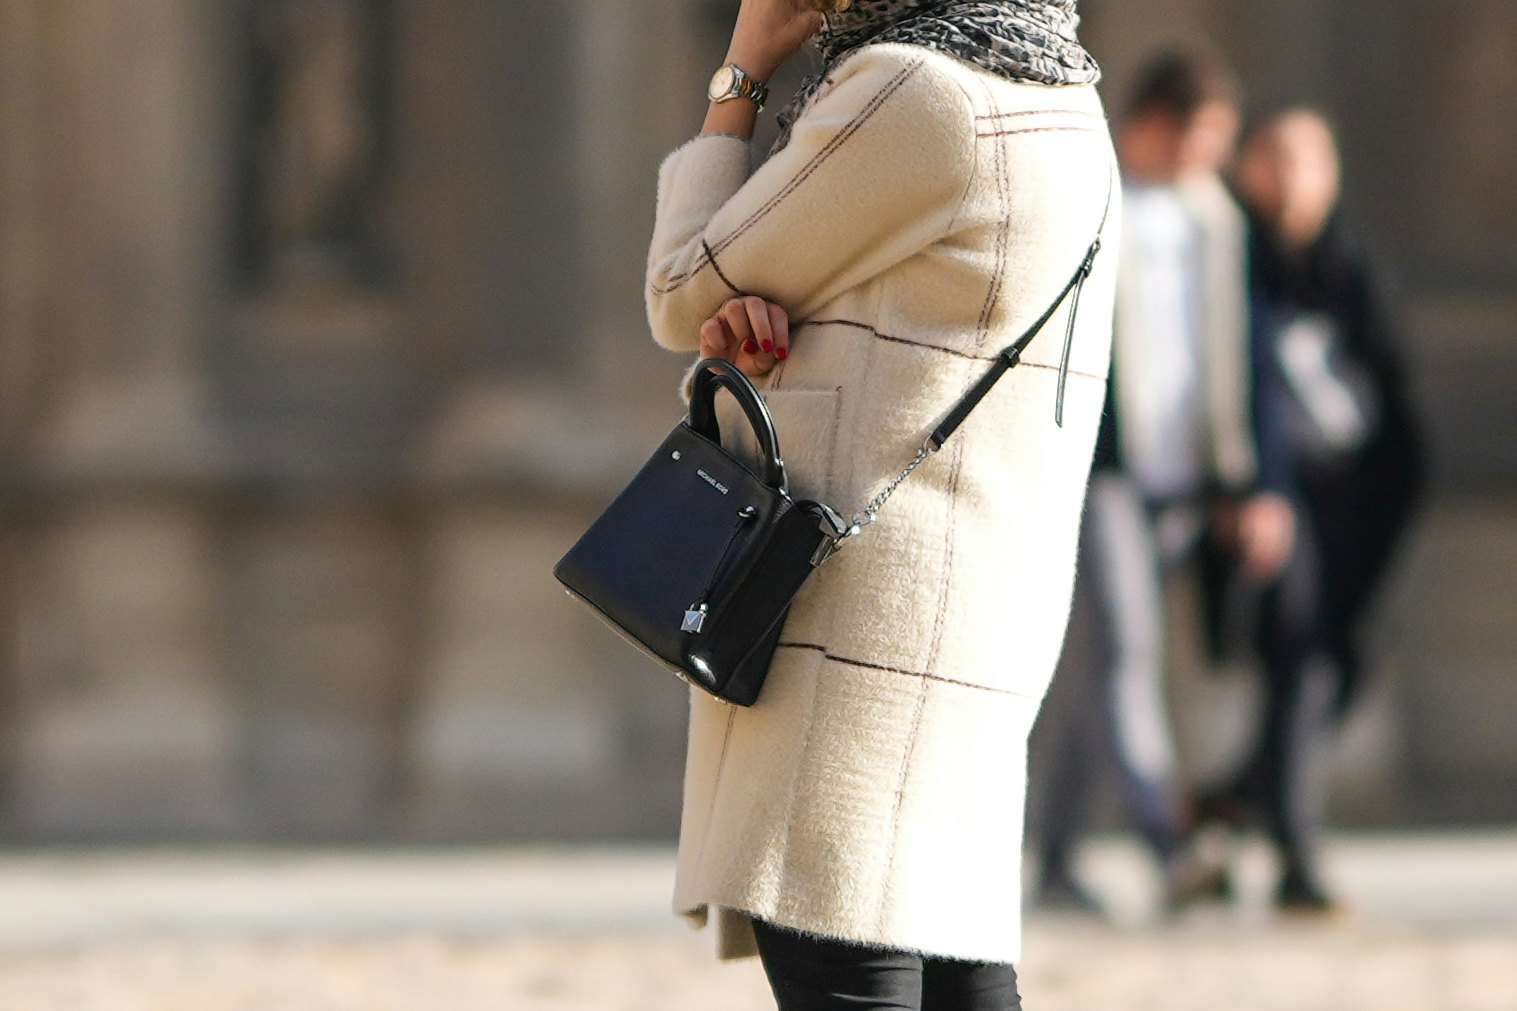 Michael Kors Purse Snag a handbag for less than 149 right now